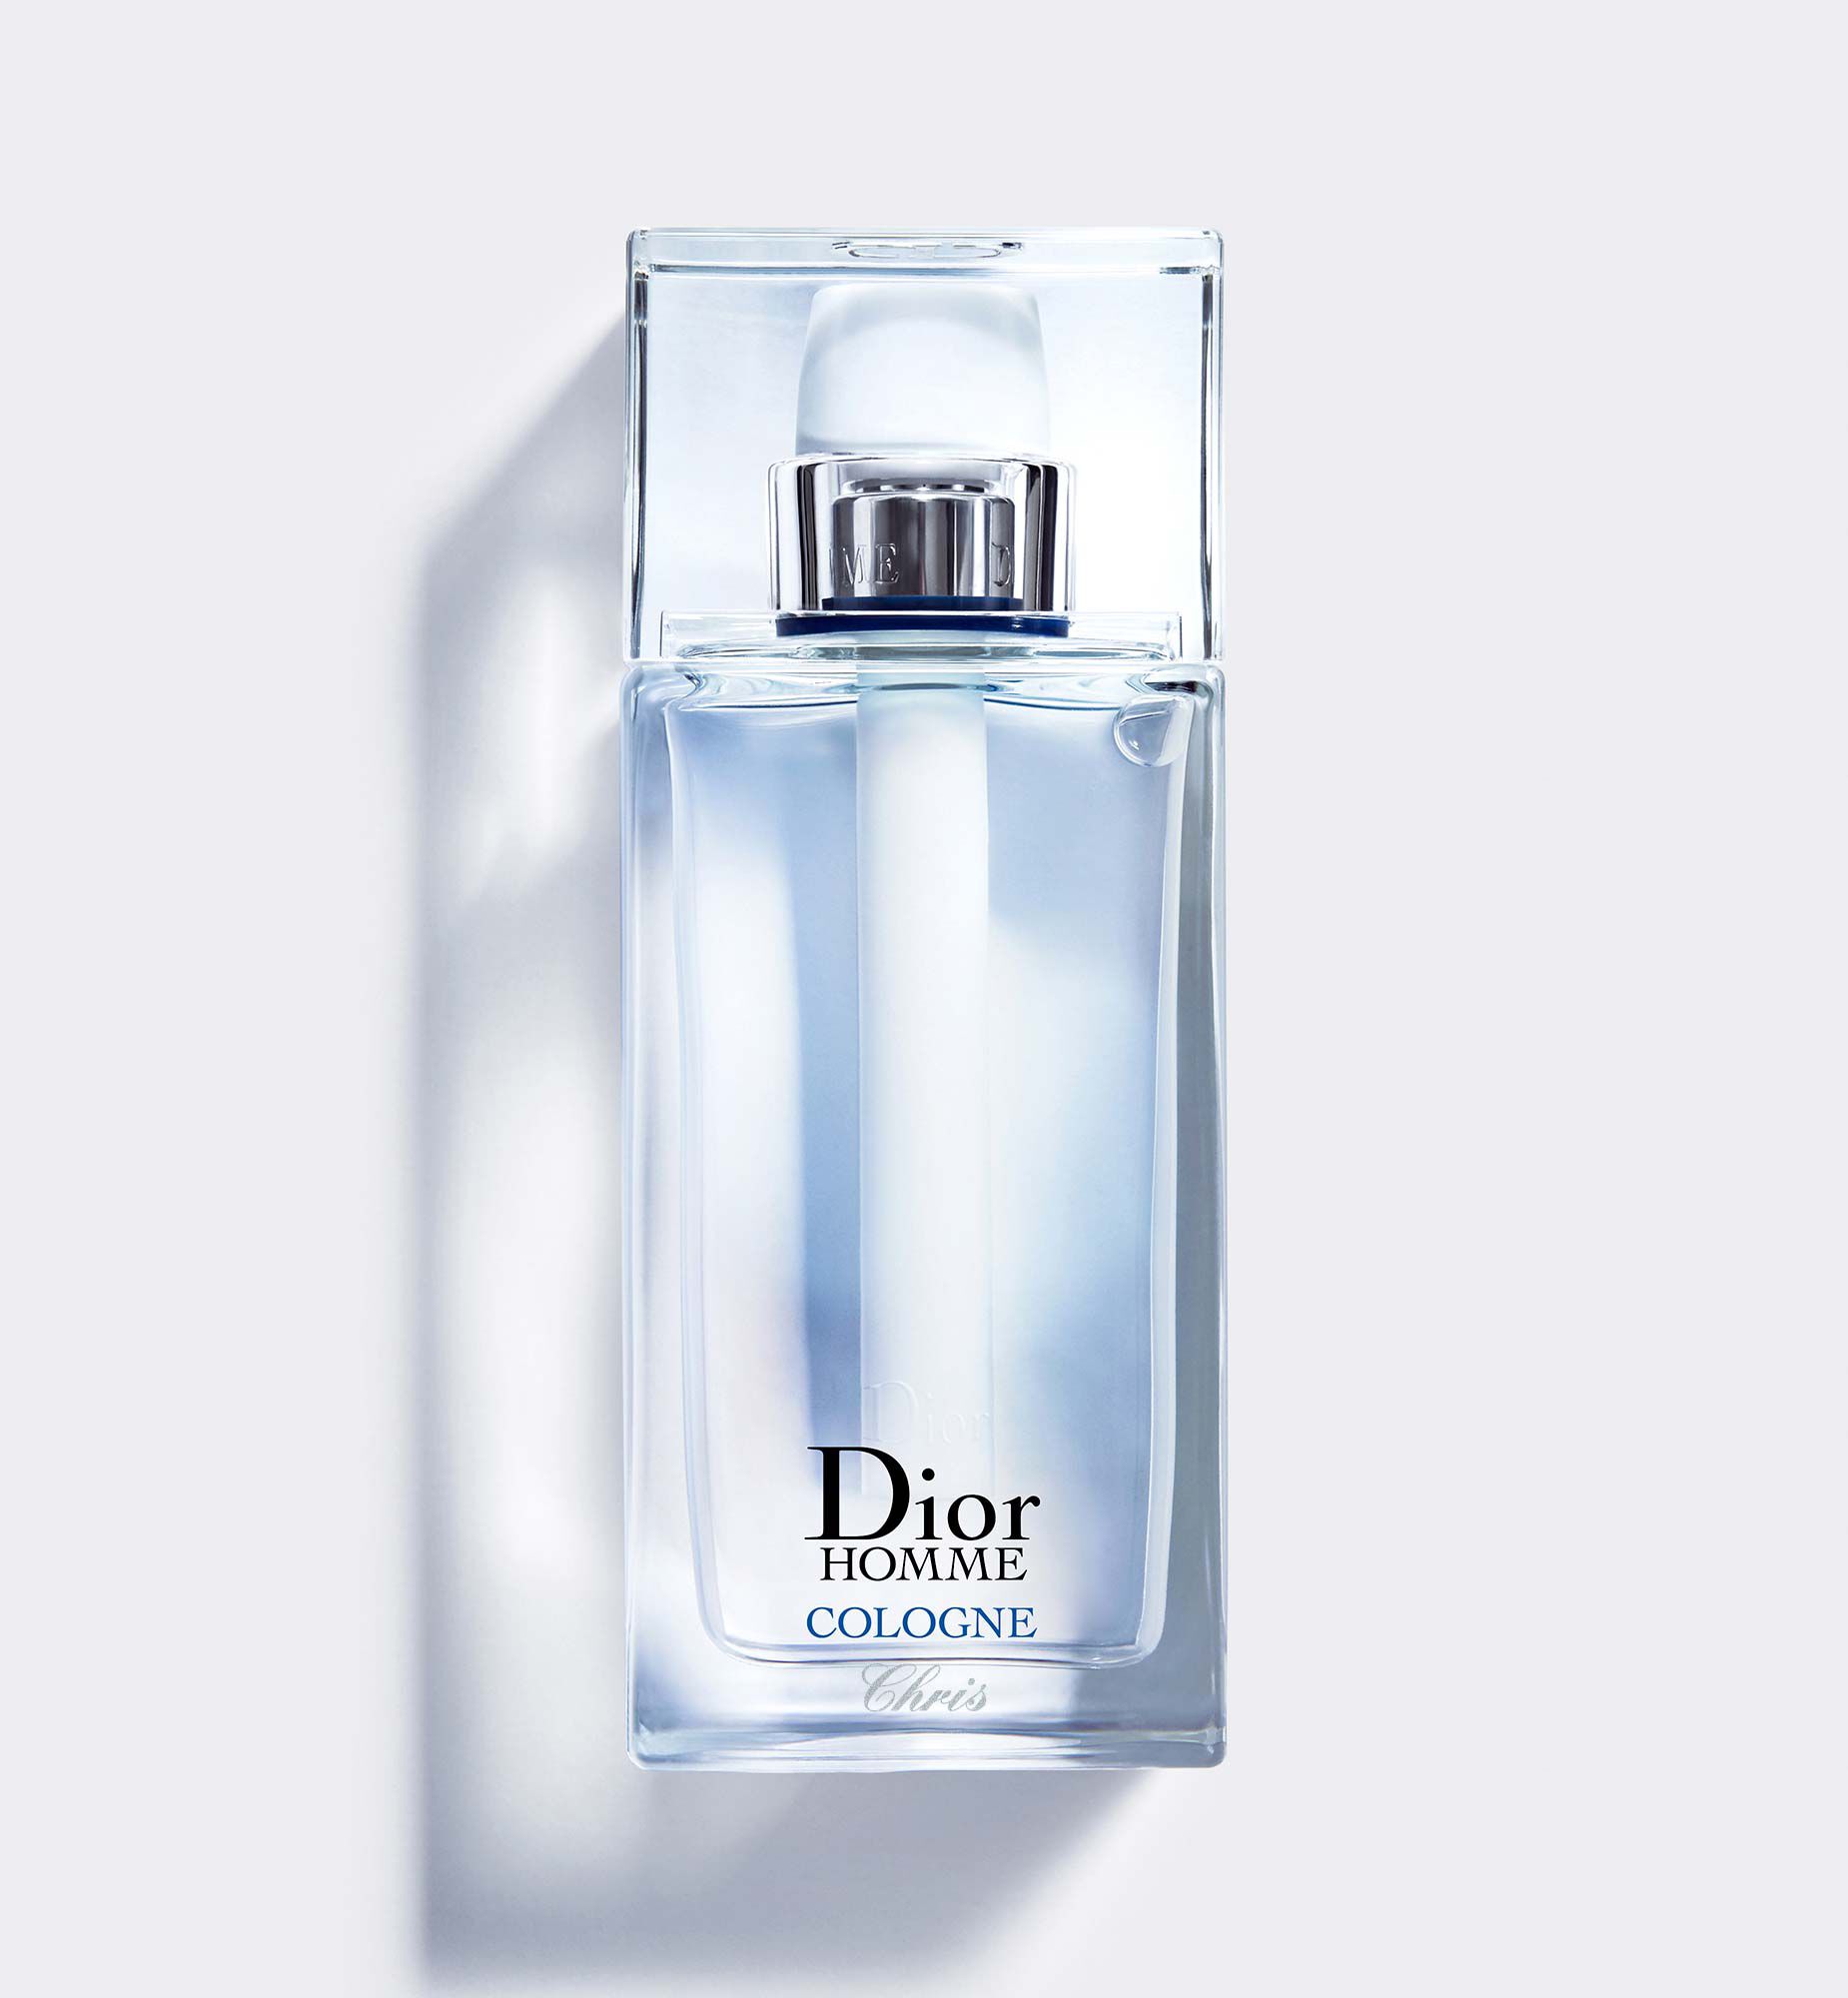 Dior Homme Cologne: & Muskusachtige Eau Cologne | DIOR